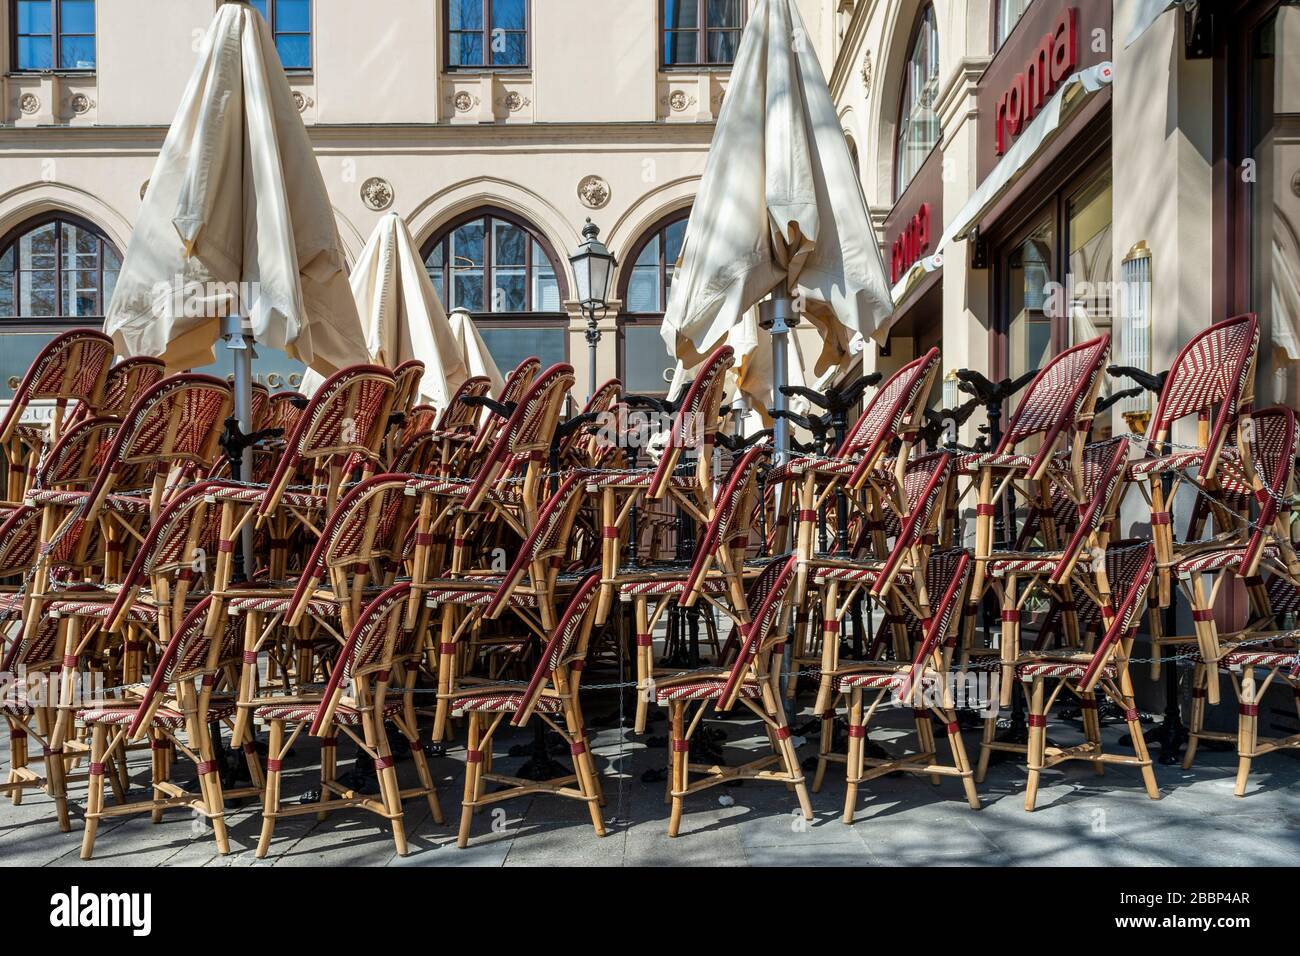 München ¬- Bayern - Deutschland, 1. April 2020: Leer geschlossene Restaurants und Bars, wegen Abschaltung wegen Corona-Virus Stockfoto